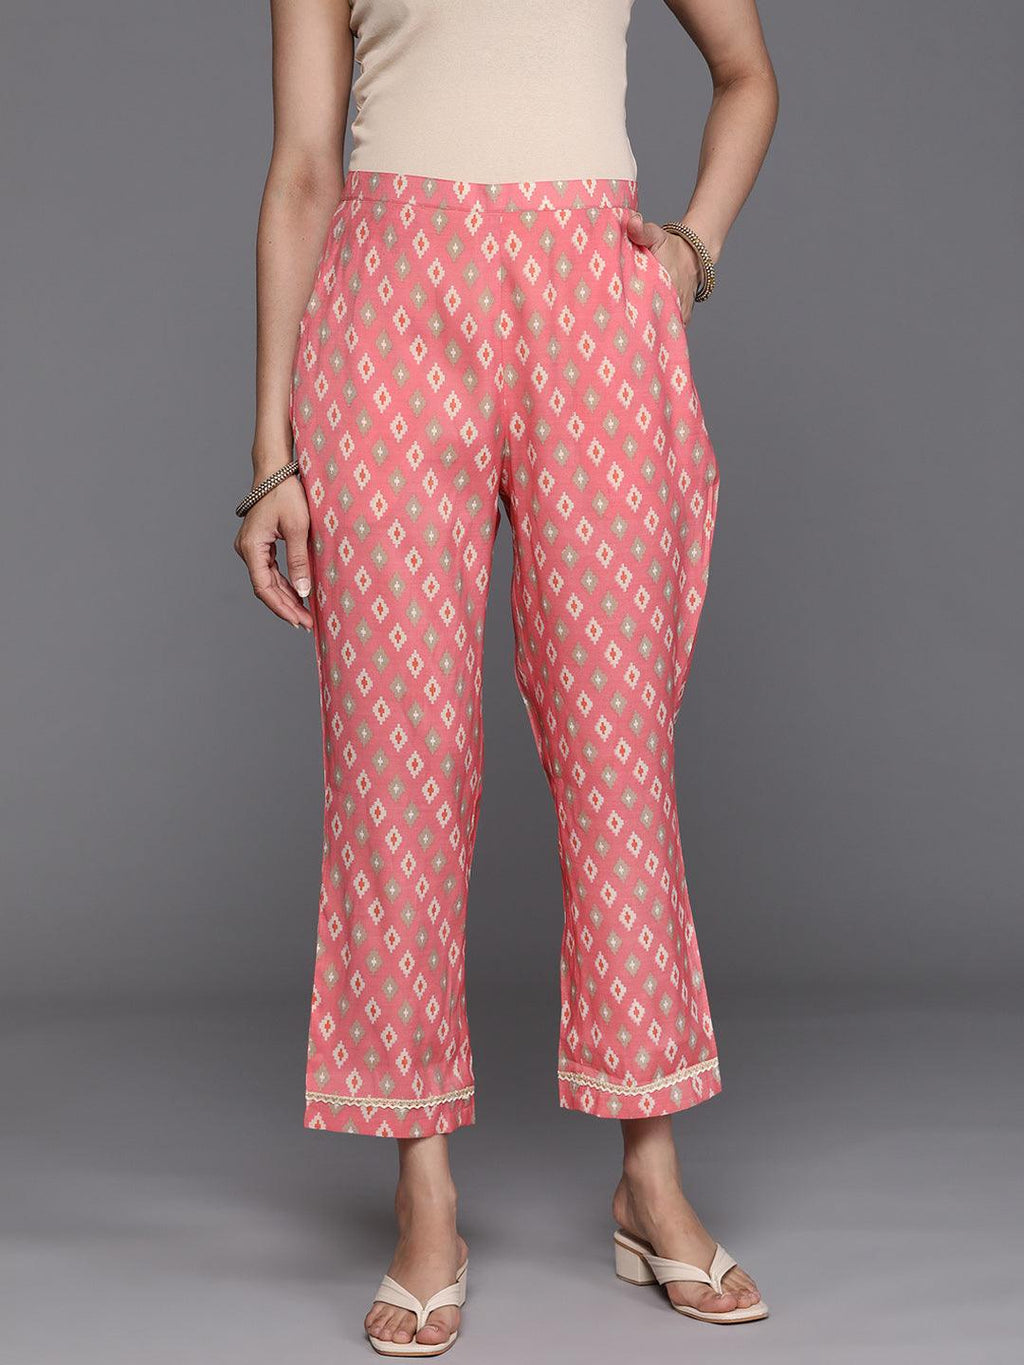 Brown silk cotton wide trousers extravagant dark pattern - Shop leftbank  Women's Pants - Pinkoi